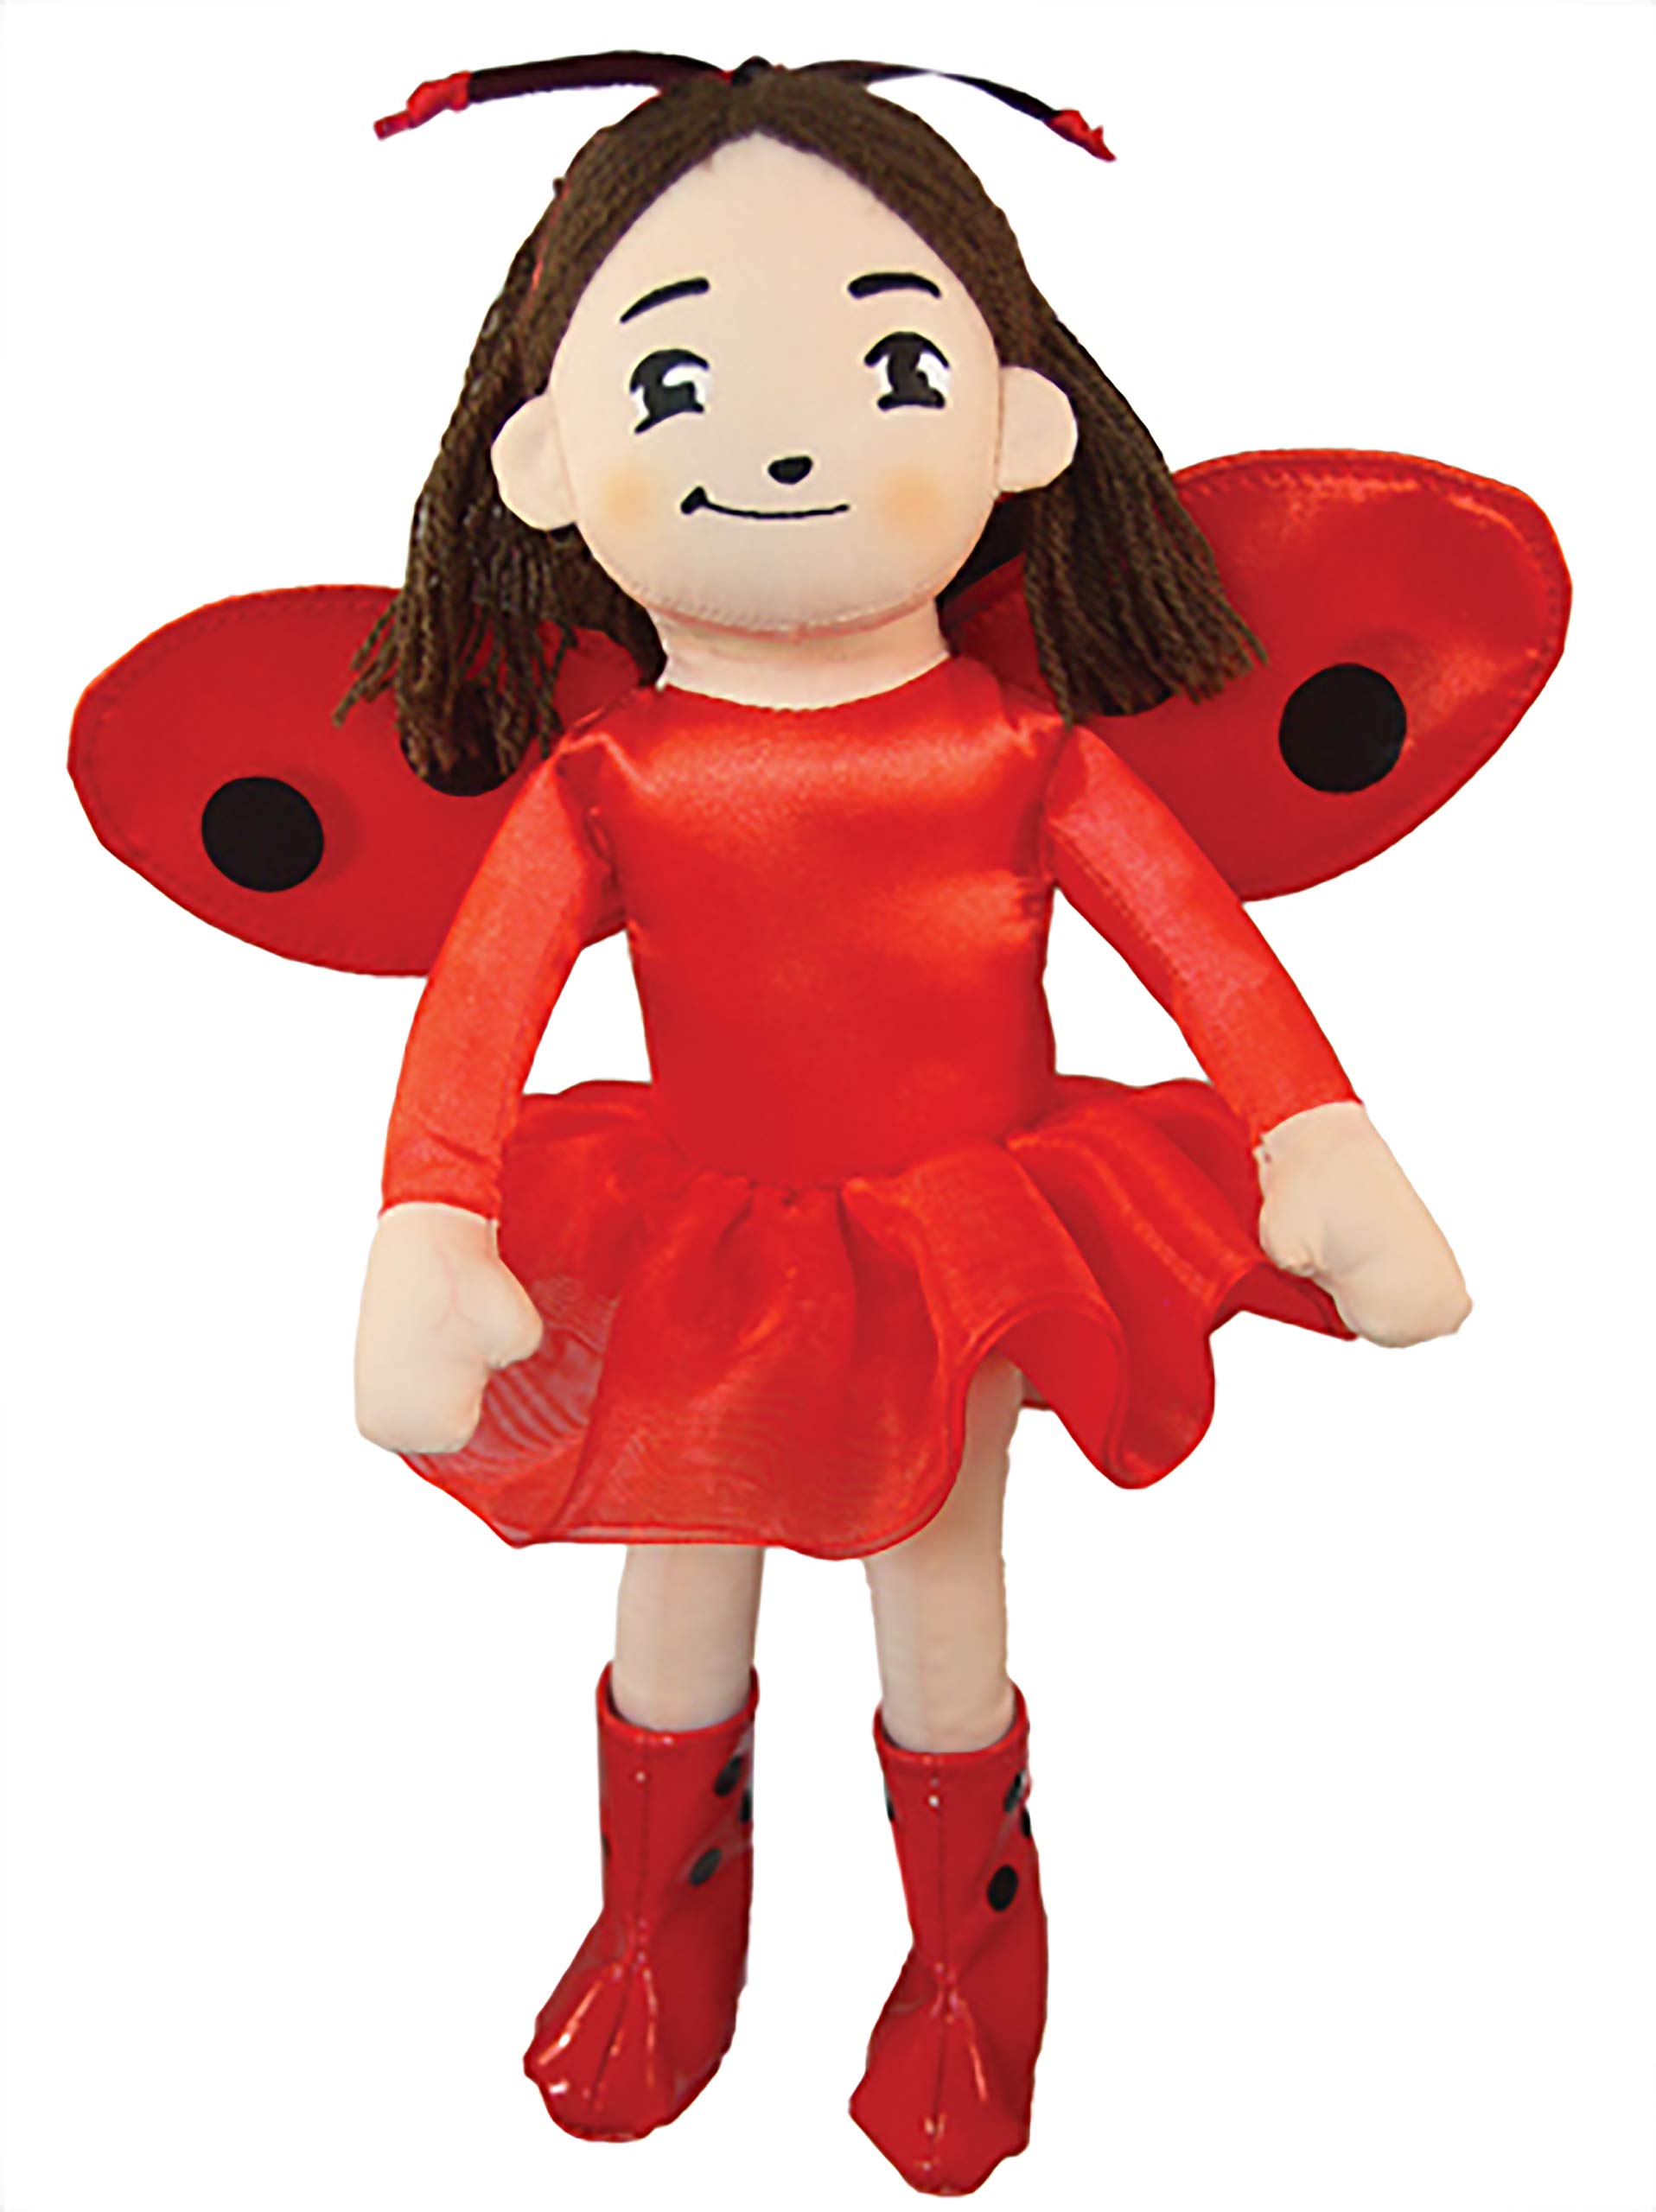 MerryMakers Ladybug Girl Plush Doll, 10-Inch